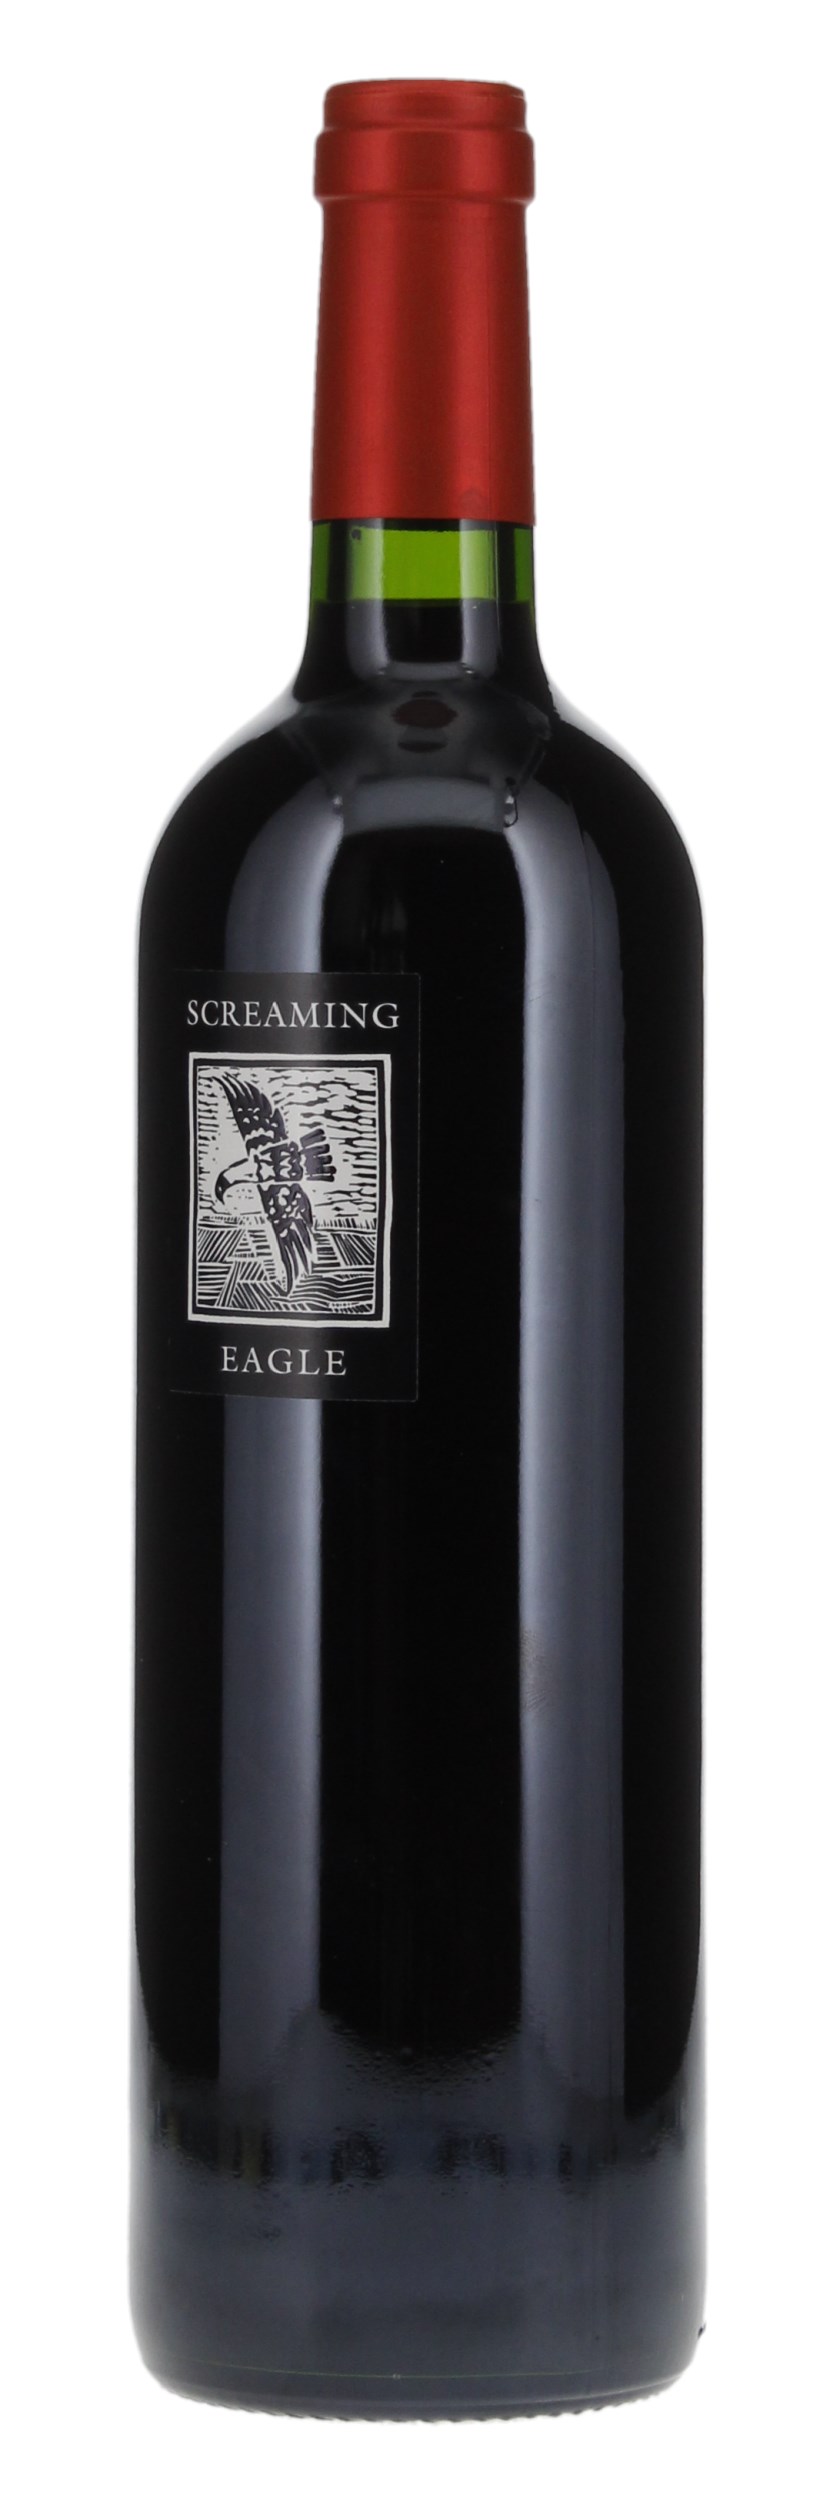 2007 Screaming Eagle Cabernet Sauvignon, 750ml